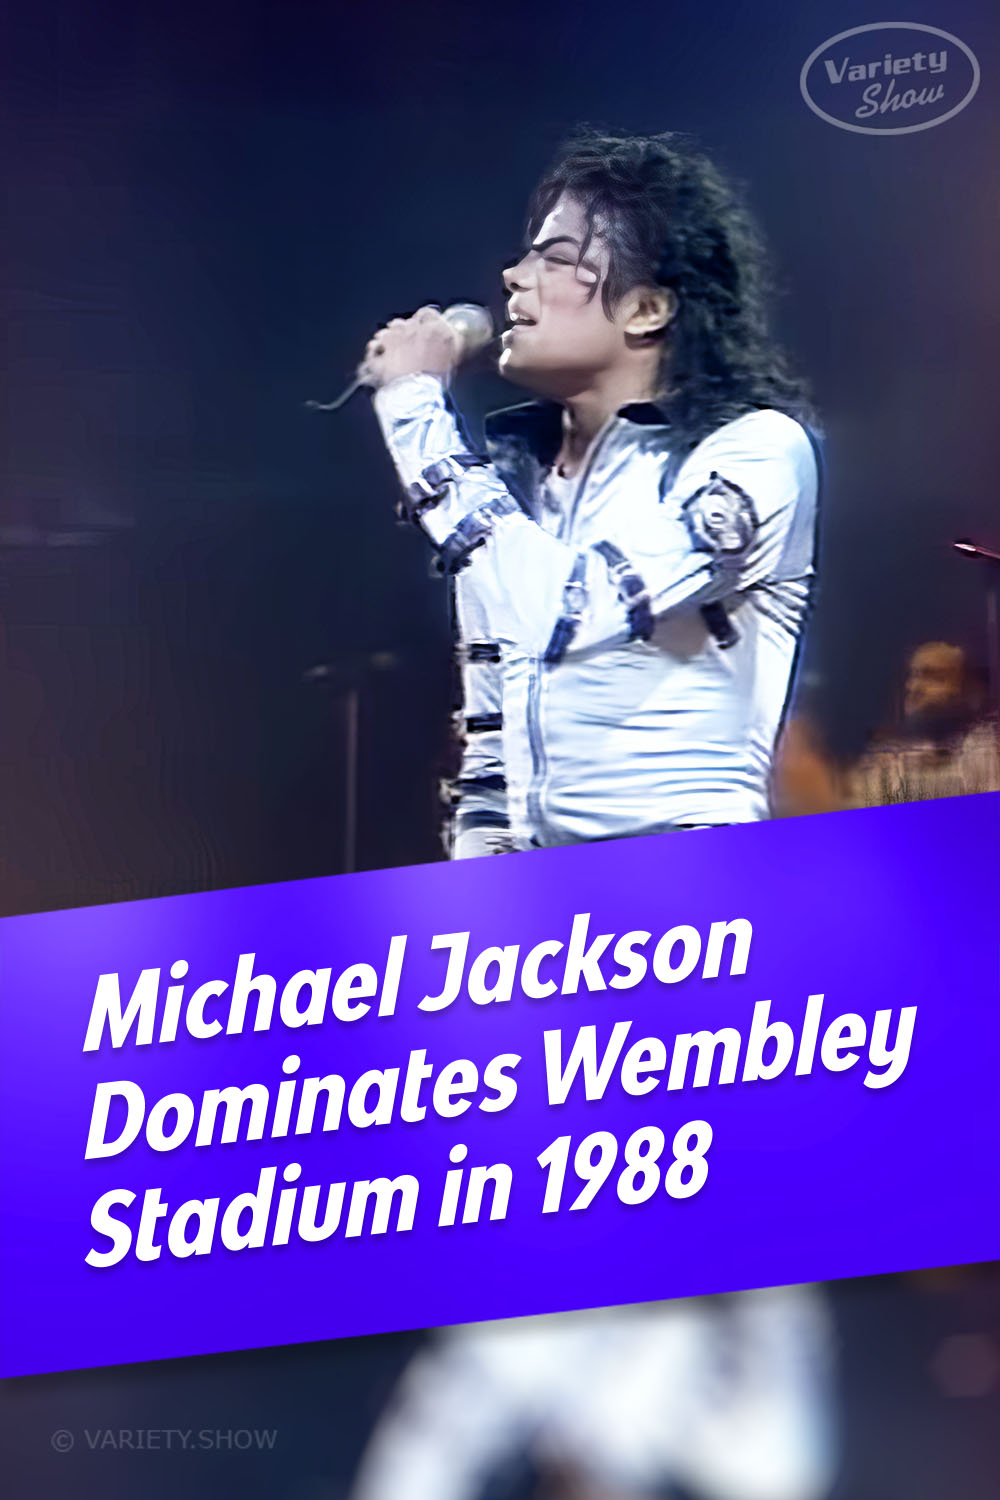 Michael Jackson Dominates Wembley Stadium in 1988